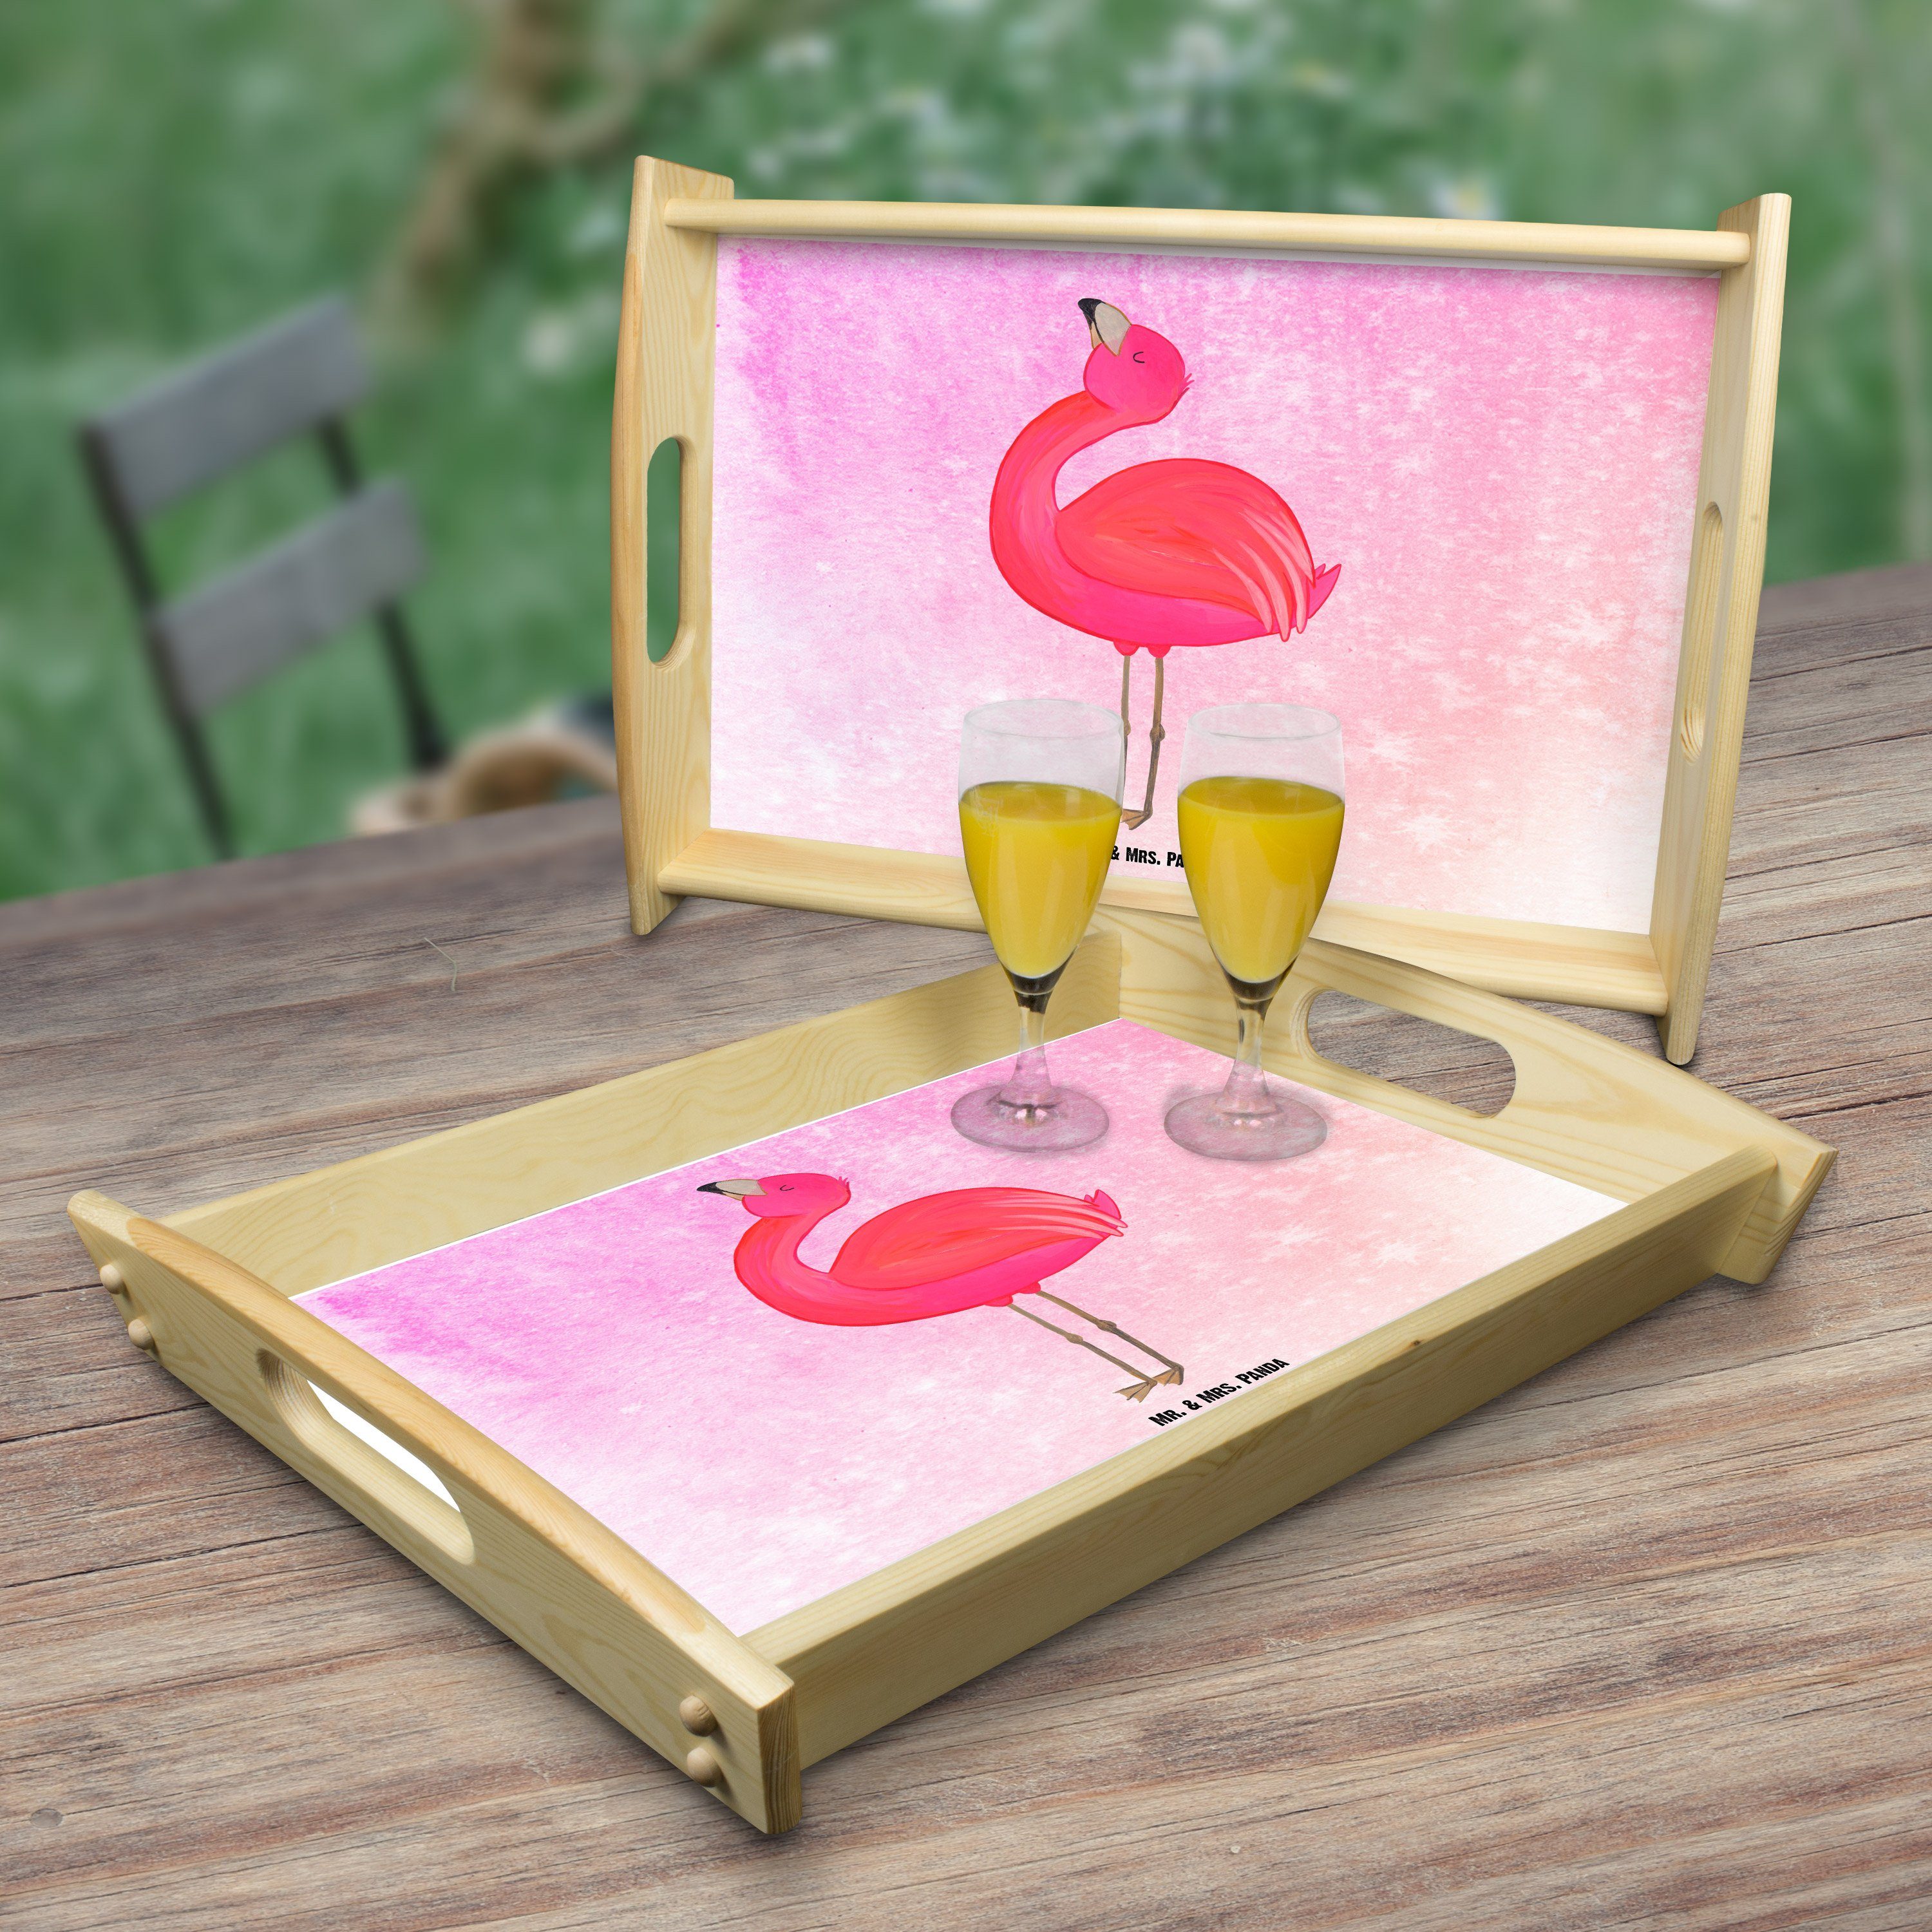 Mr. & Mrs. Panda Tablett Echtholz Geschenk, glücklich, - stolz lasiert, (1-tlg) Pink - Flamingo Küchentablett, Aquarell